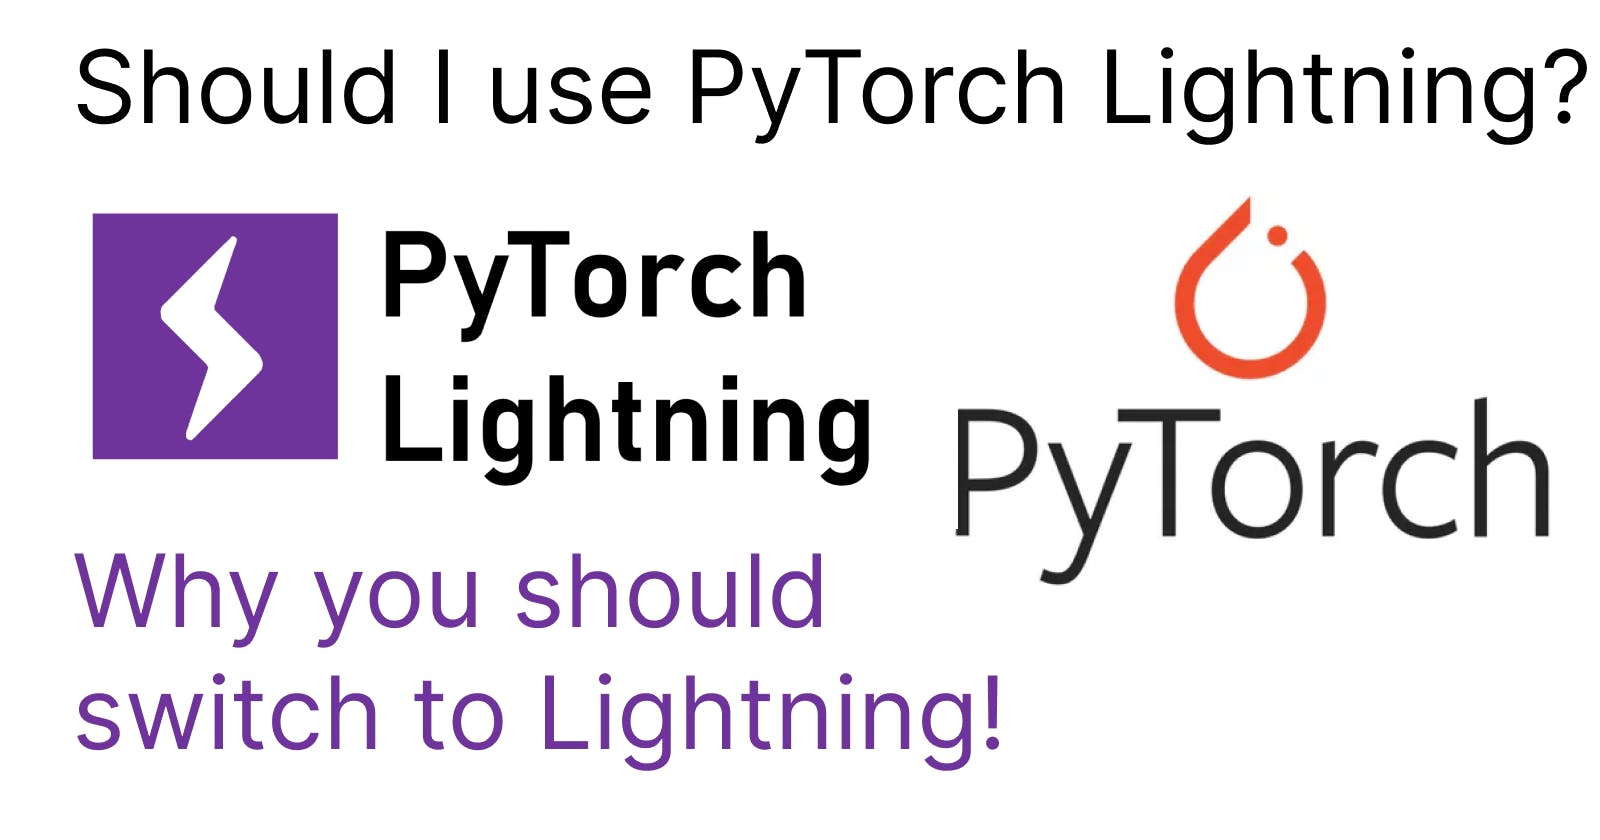 Should I start using PyTorch Lightning?